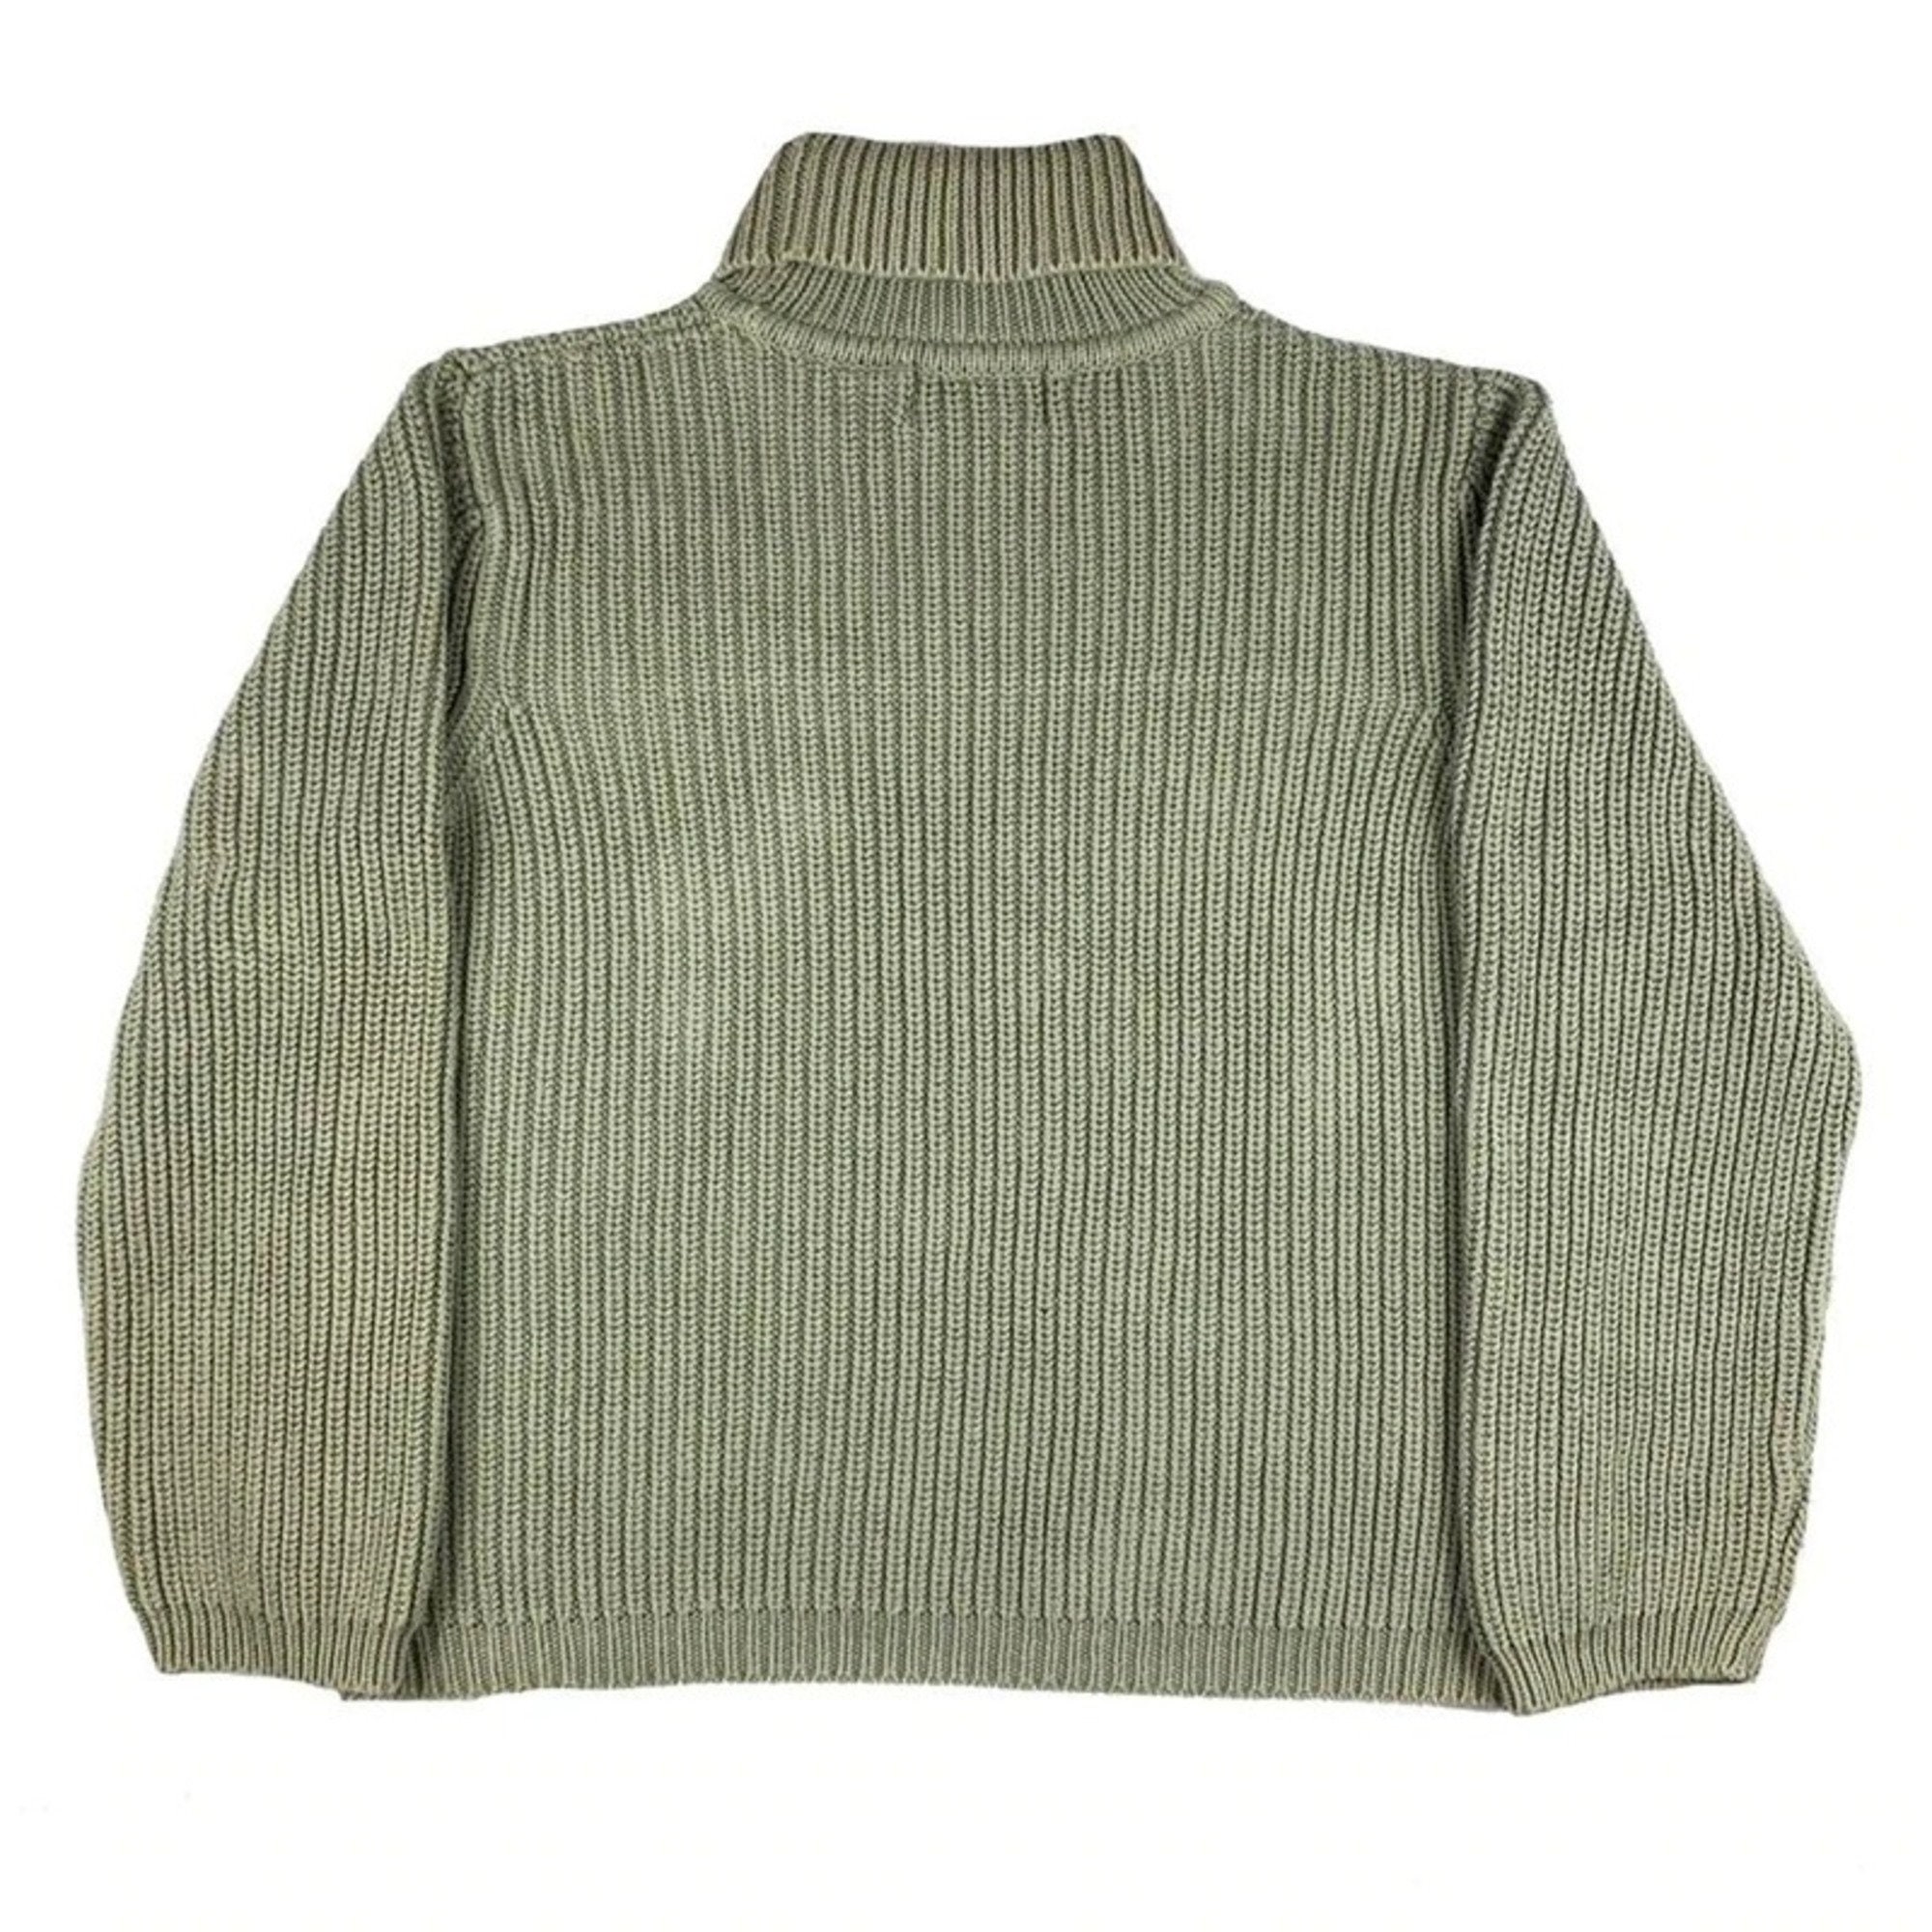 Men's Vintage Knit Sweaters Fall Winter Pullover Sweater Turtleneck Unisex Y2k Harajuku Oversized Sweater Print Chic Aesthetics